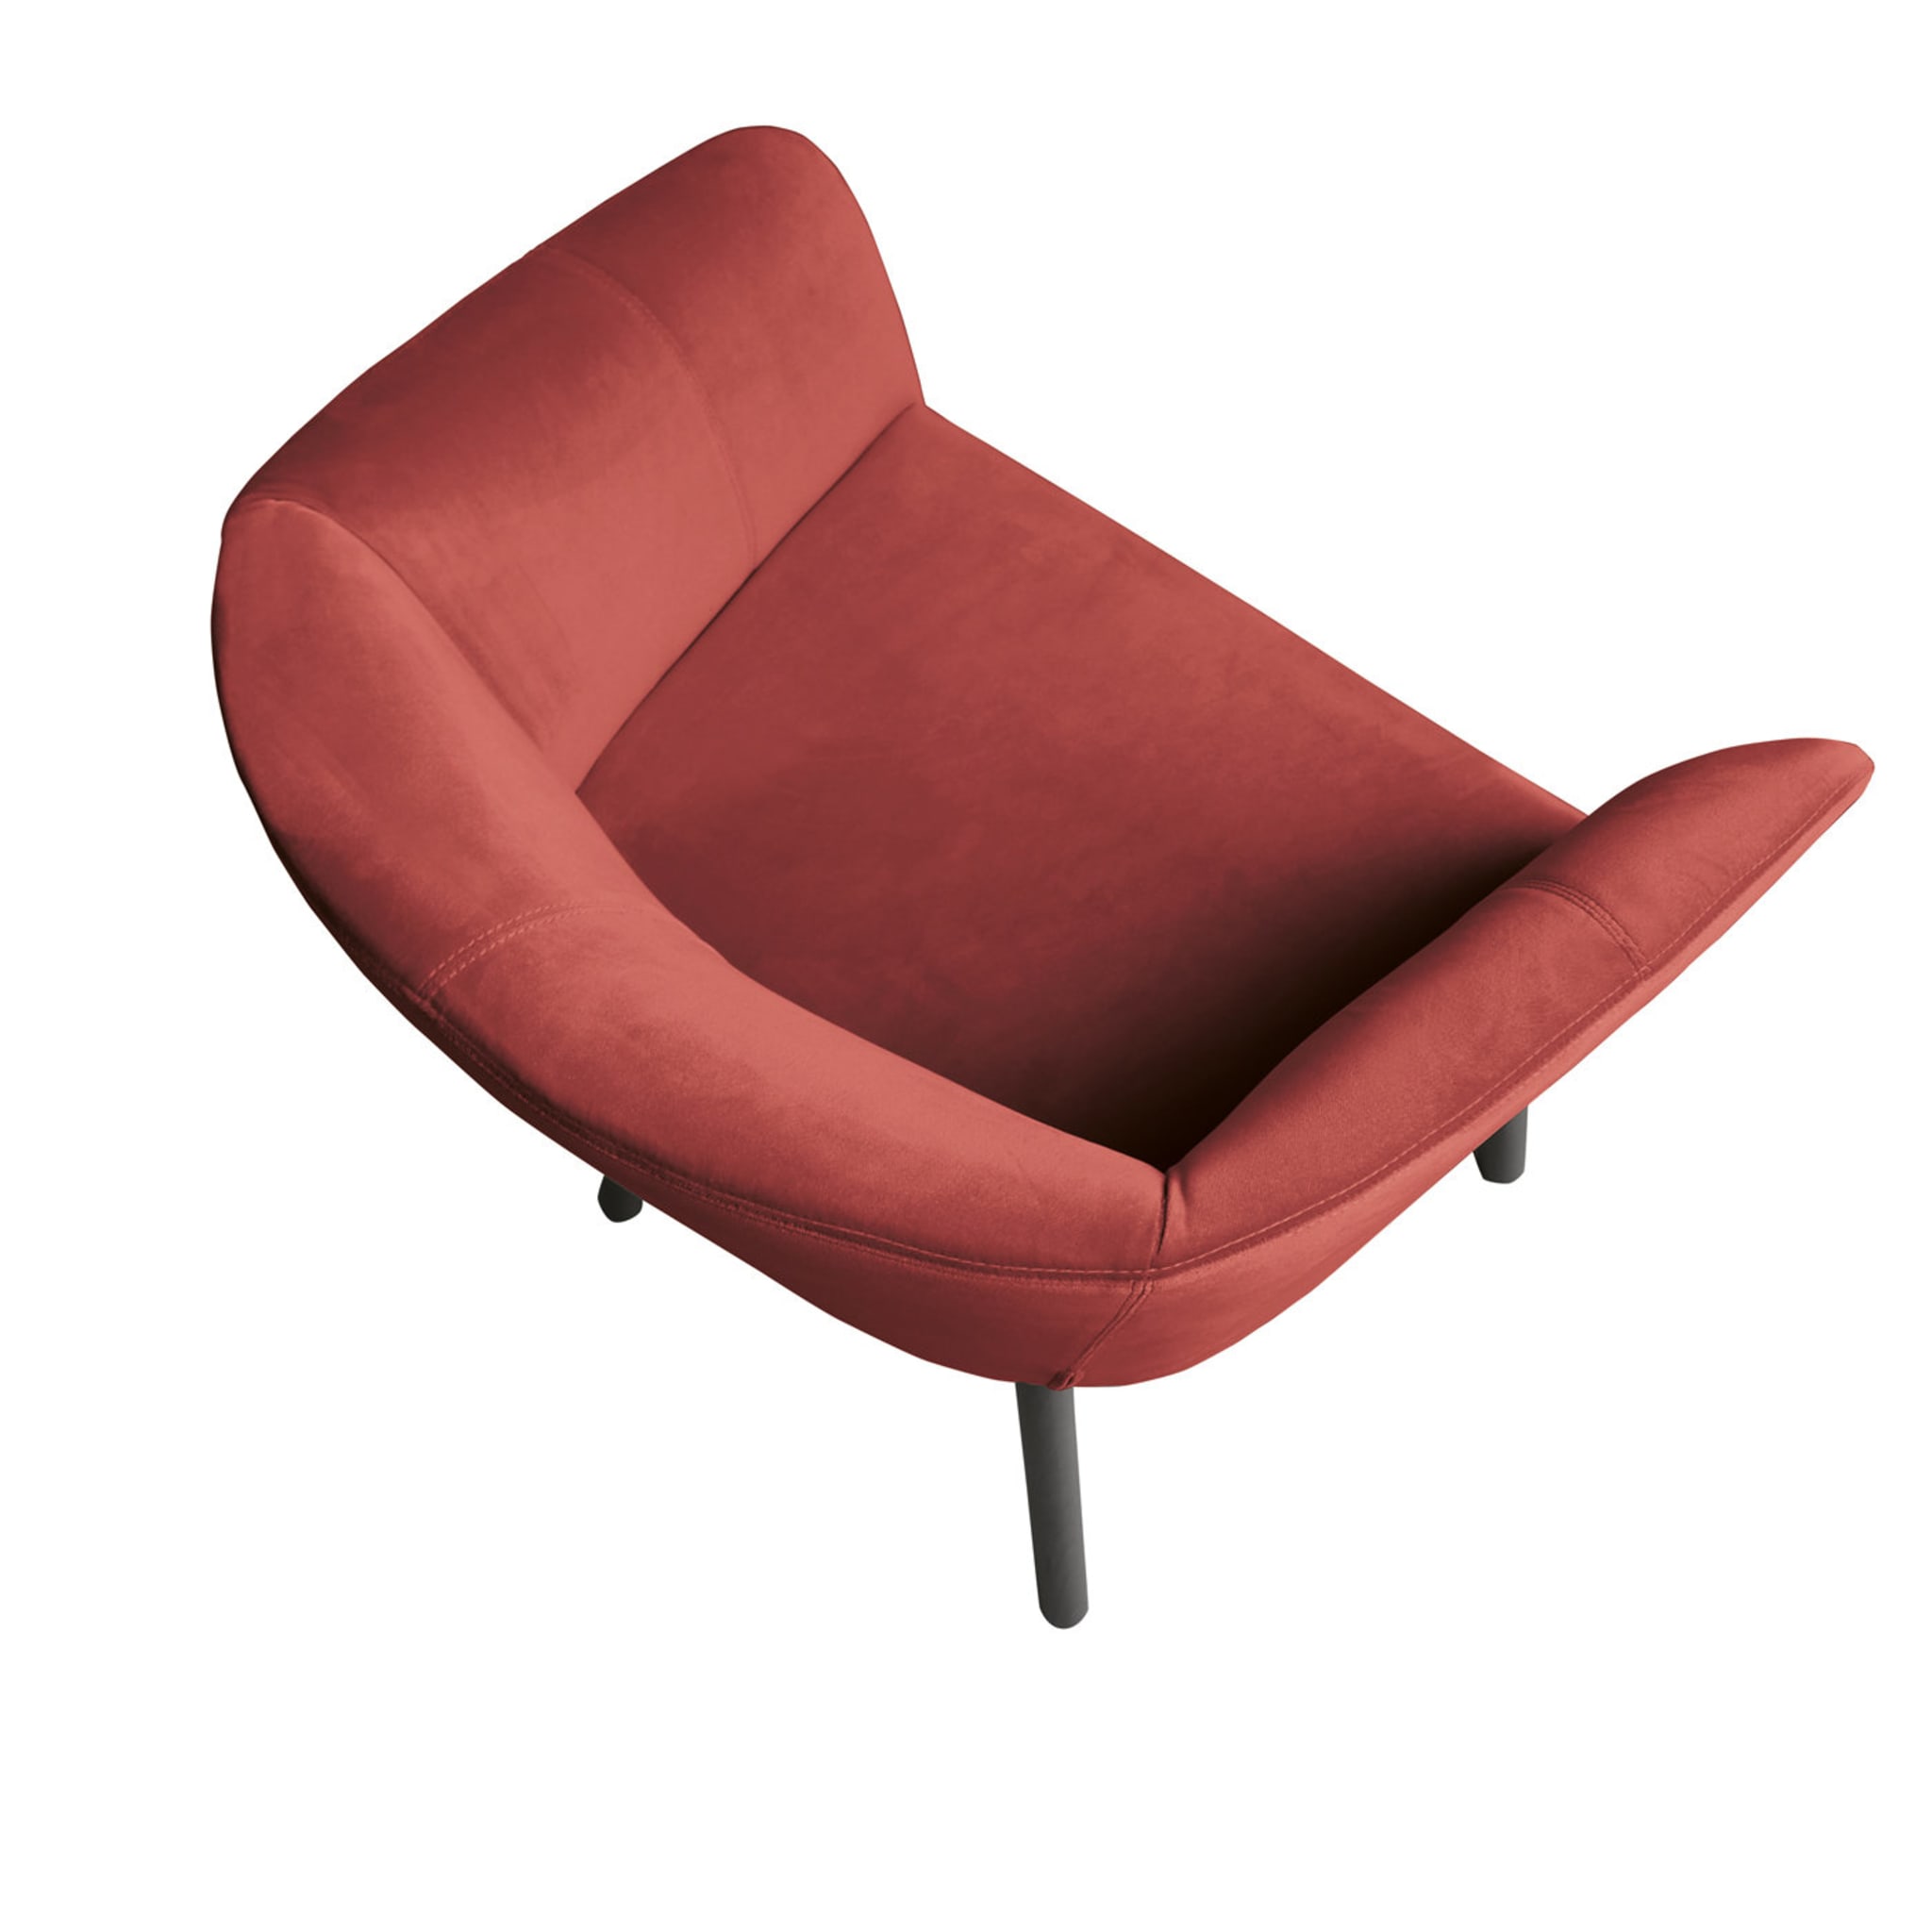 Balù Red Chair By Emilio Nanni - Alternative view 1